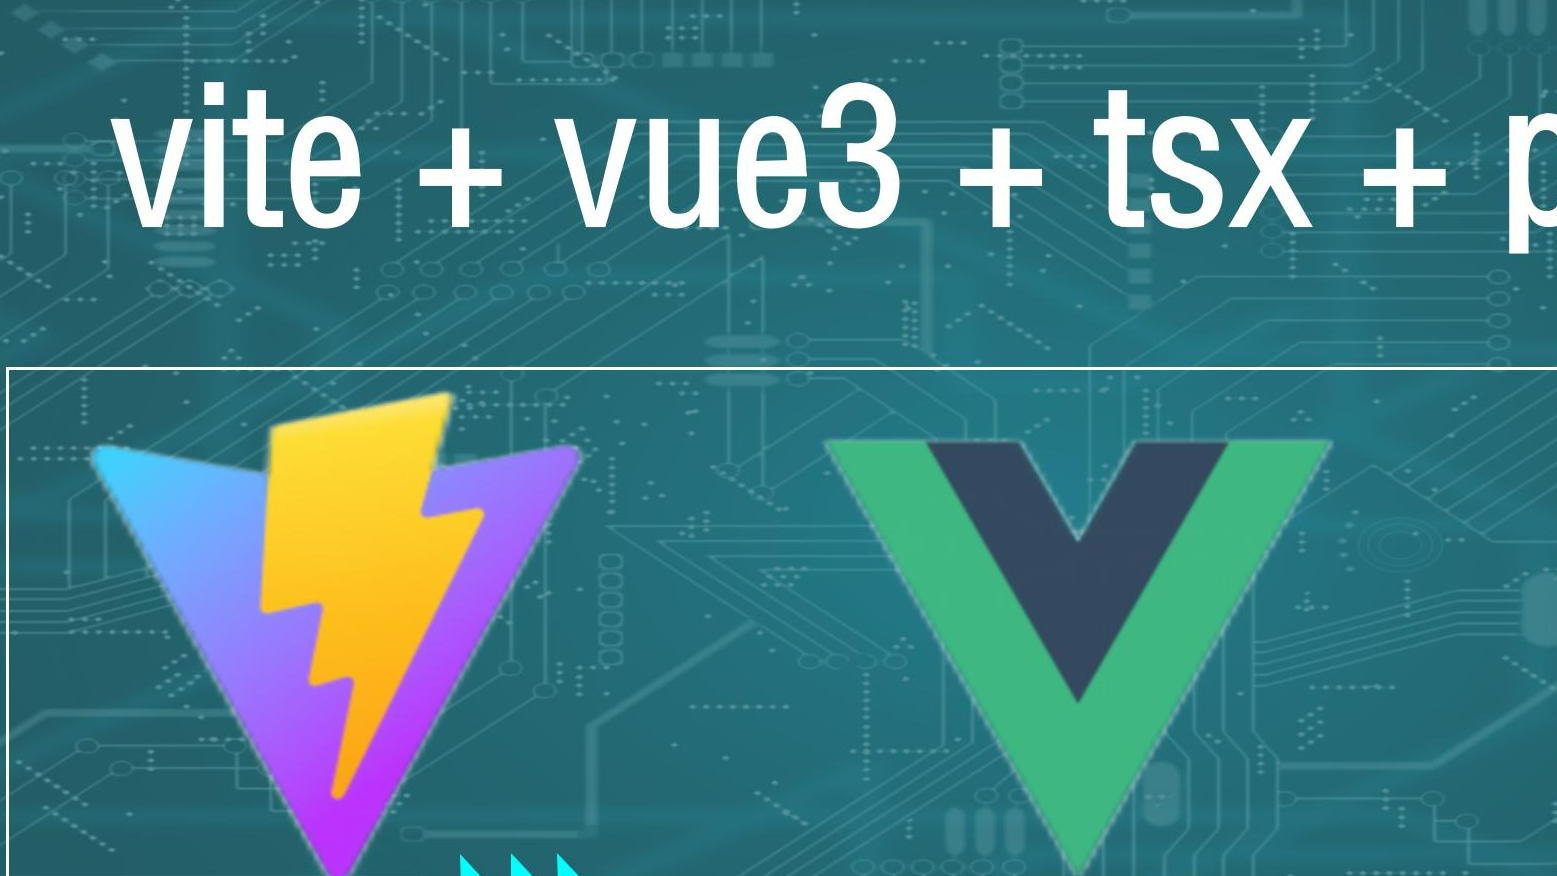 Vue3 SFC 和 TSX 方式调用子组件中的函数